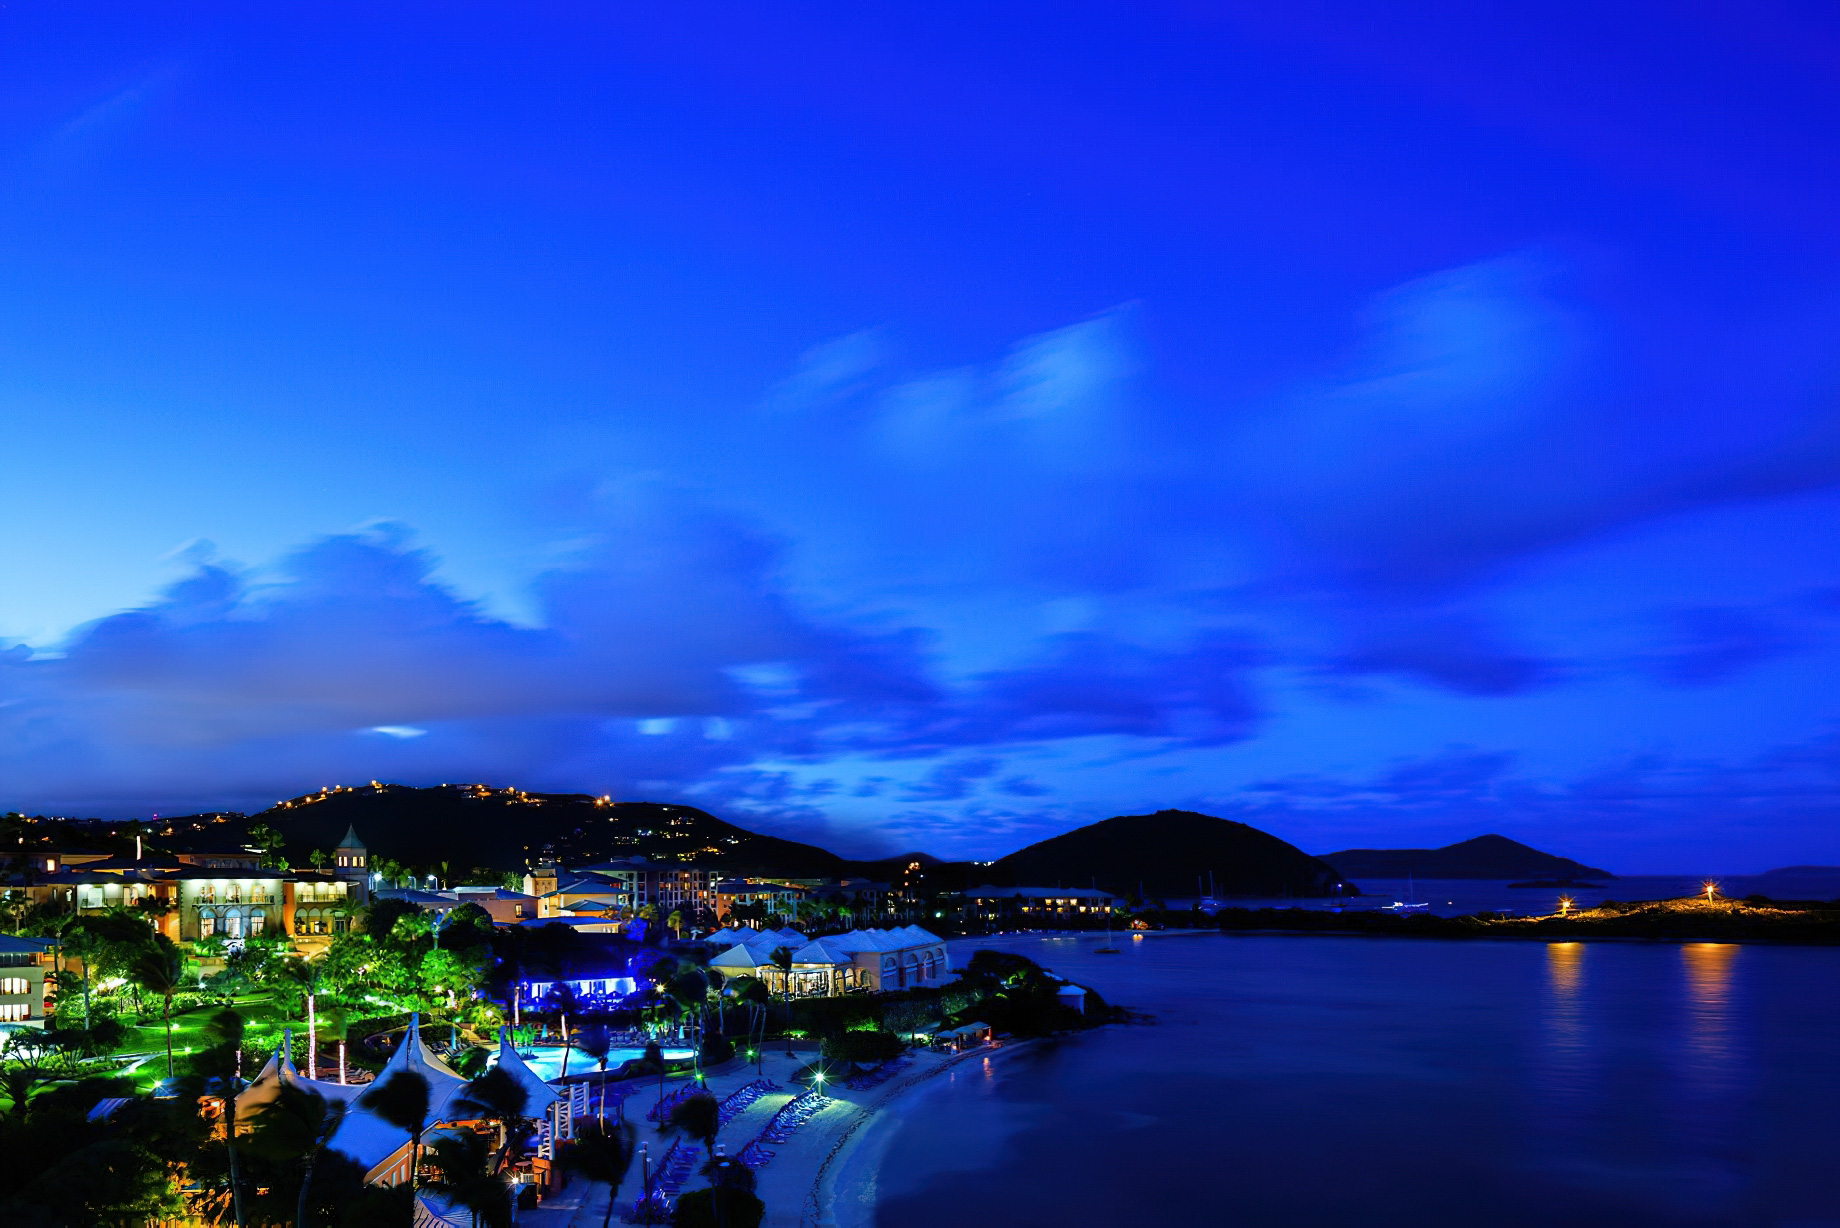 096 – The Ritz-Carlton, St. Thomas Resort – St. Thomas, U.S. Virgin Islands – Resort Aerial View Night